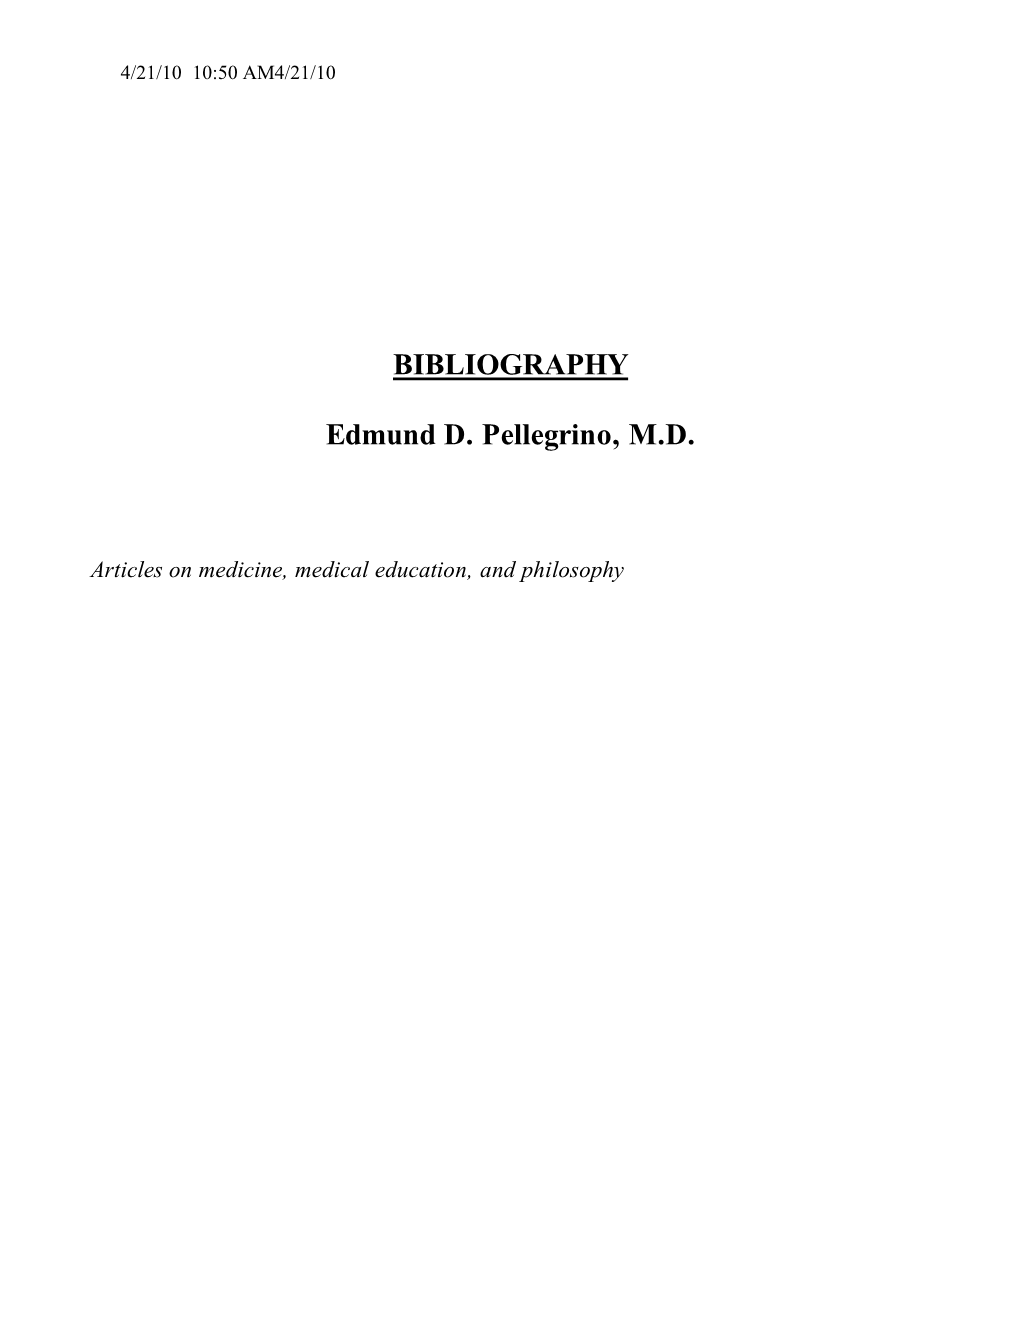 BIBLIOGRAPHY Edmund D. Pellegrino, M.D